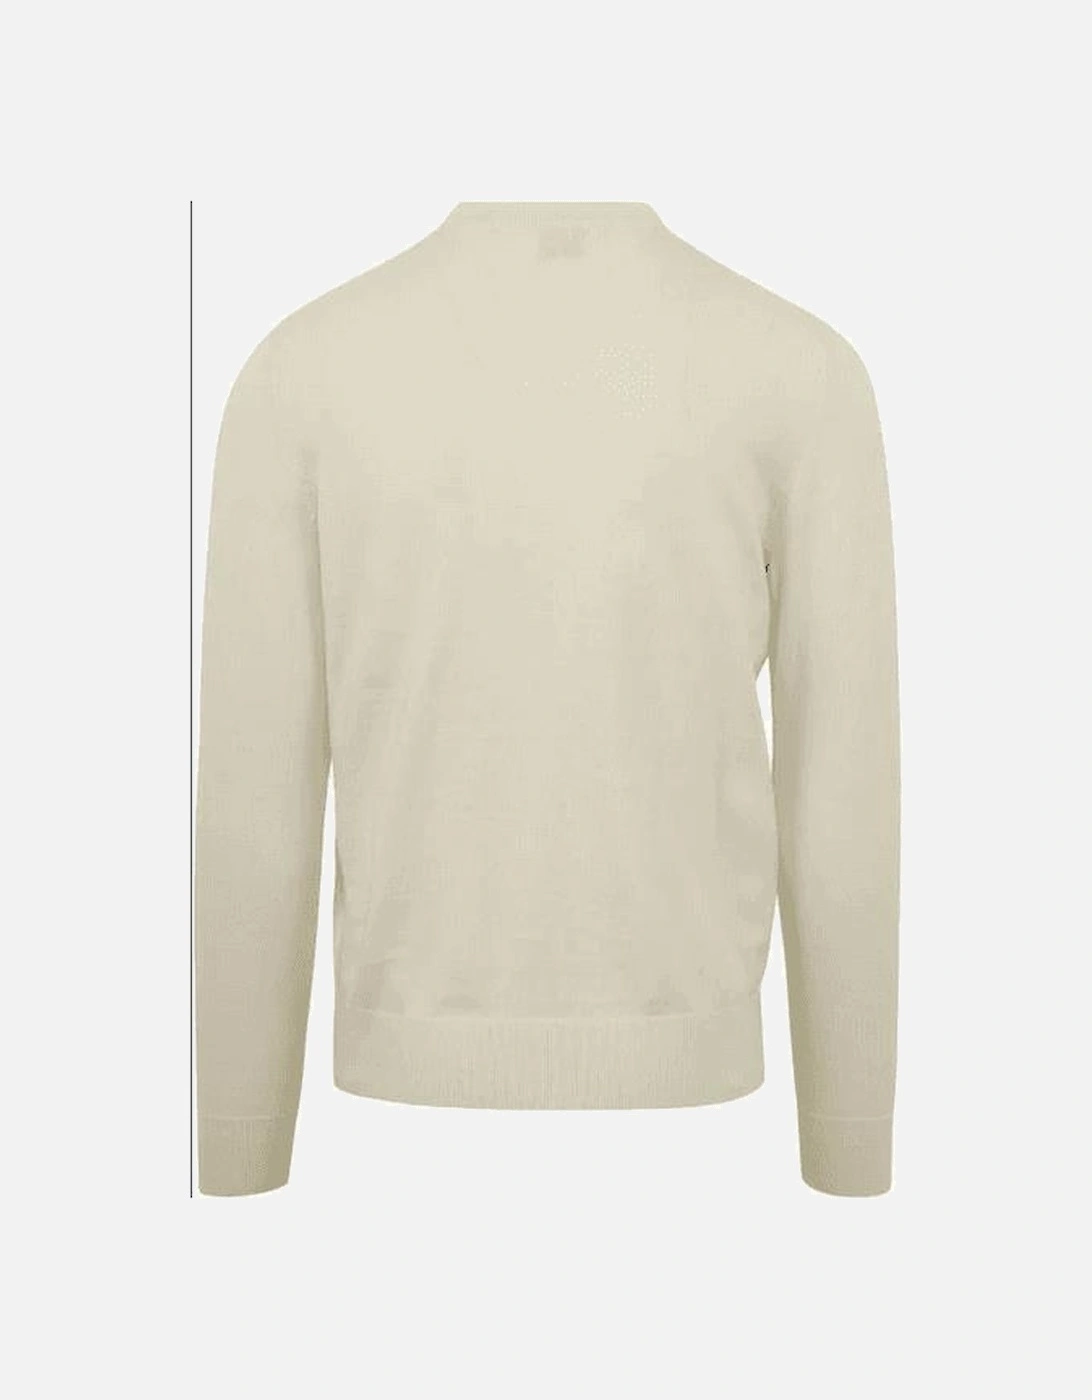 Kanovano Cotton Crew Neck White/Cream Sweatshirt